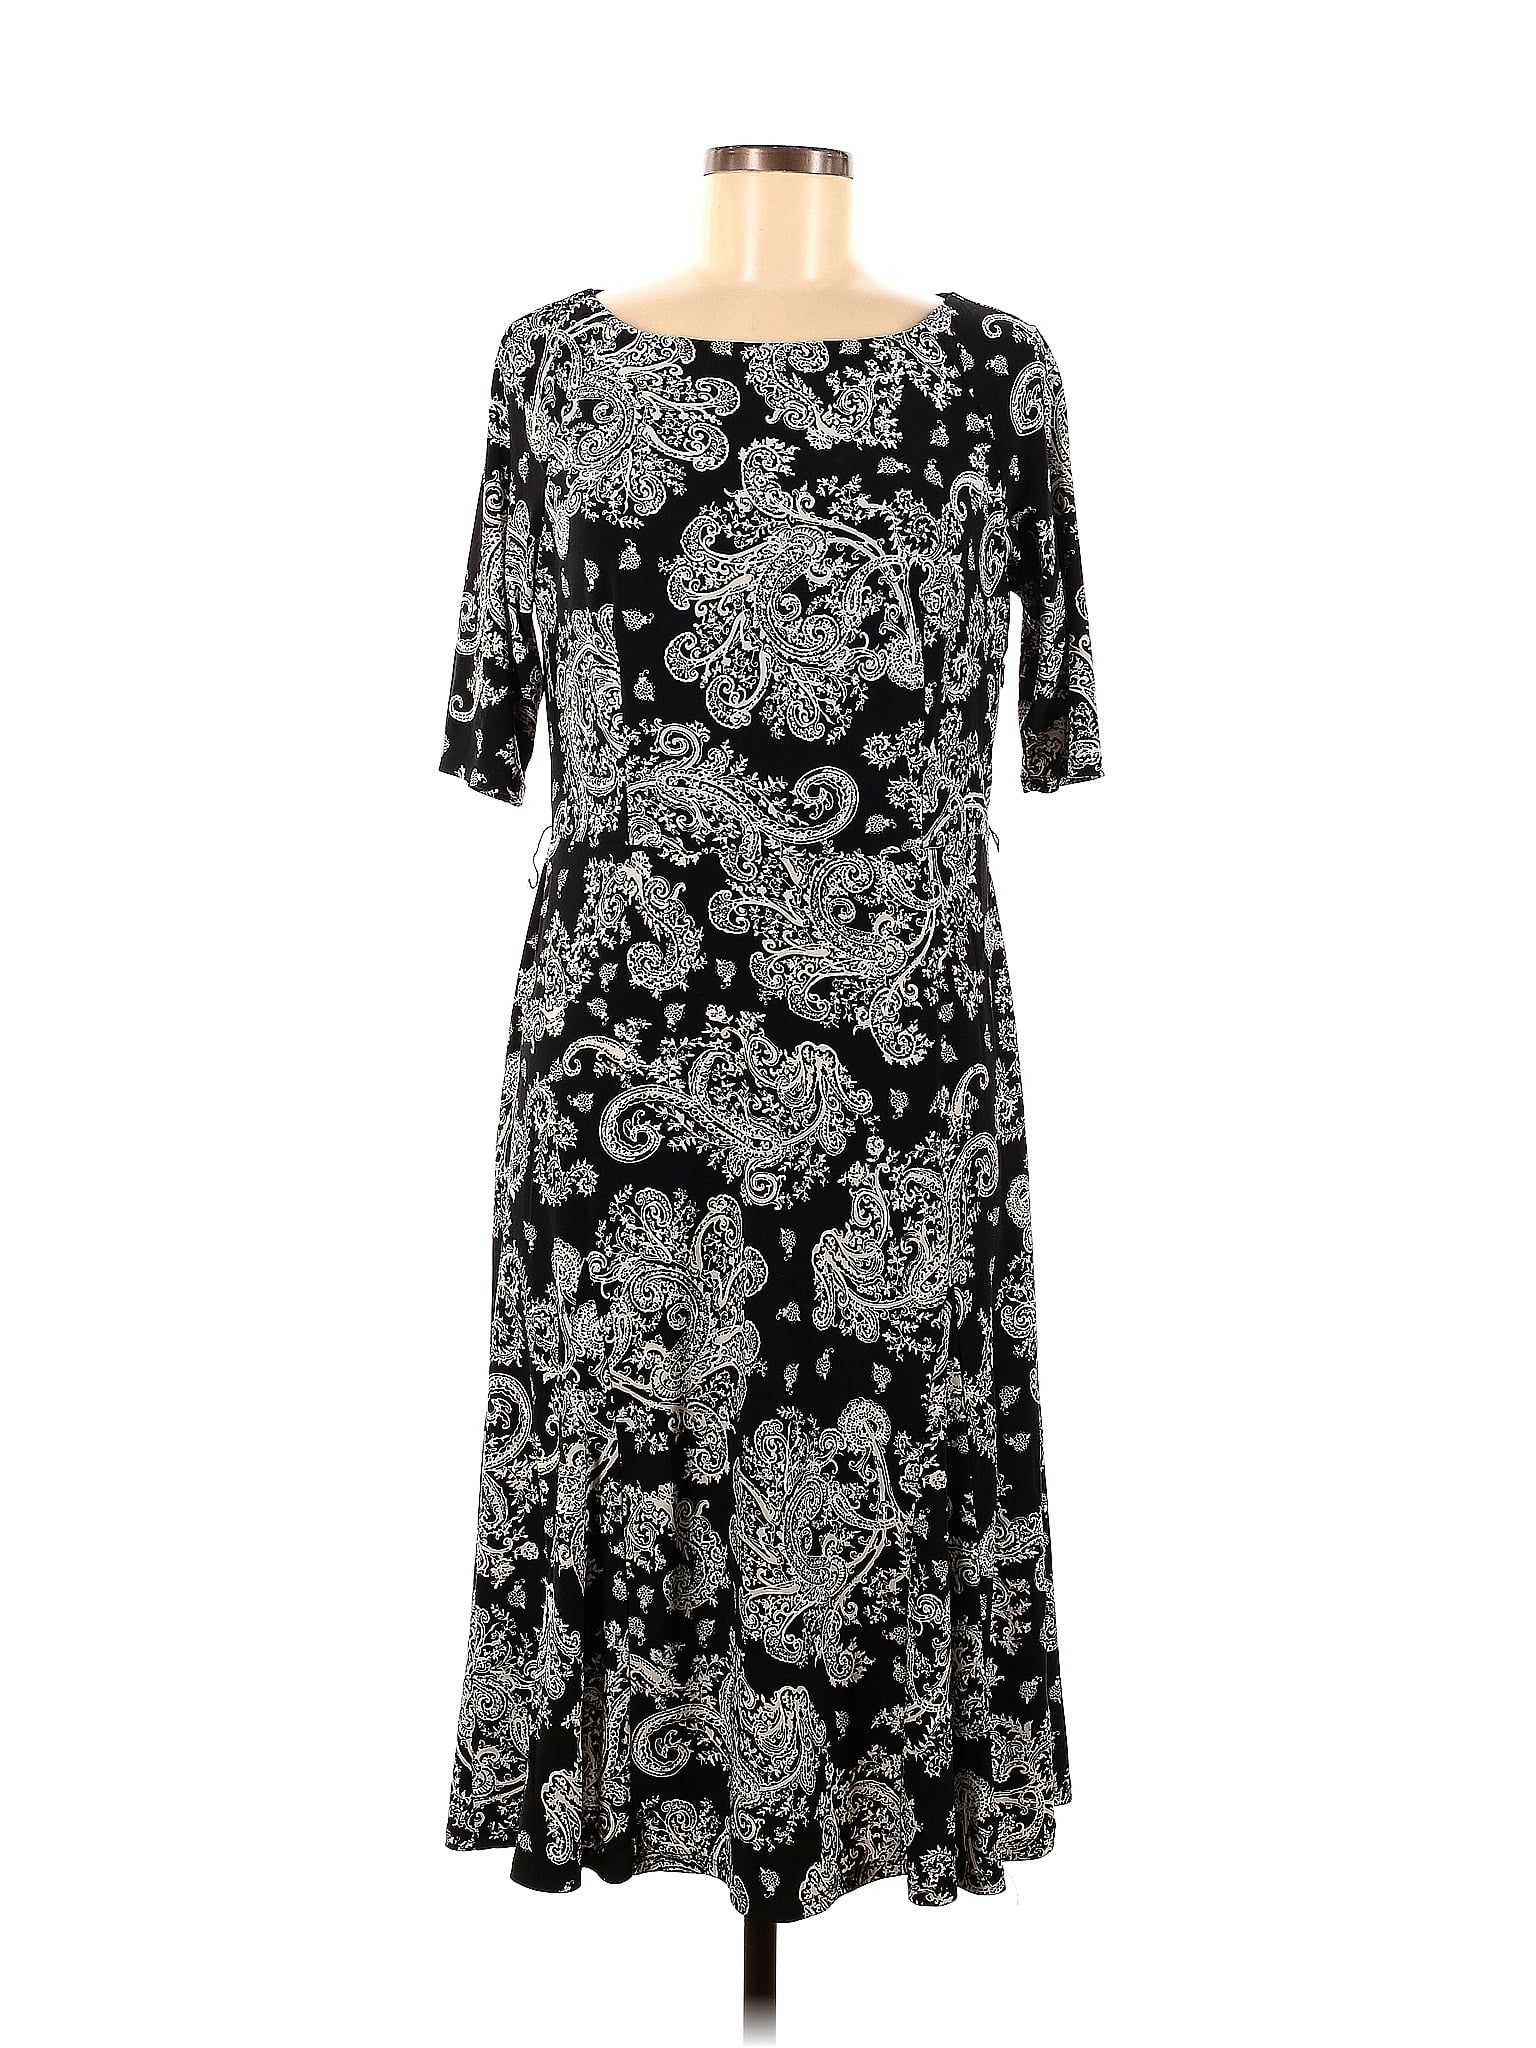 Jones New York Multi Color Black Casual Dress Size 8 - 76% off | thredUP